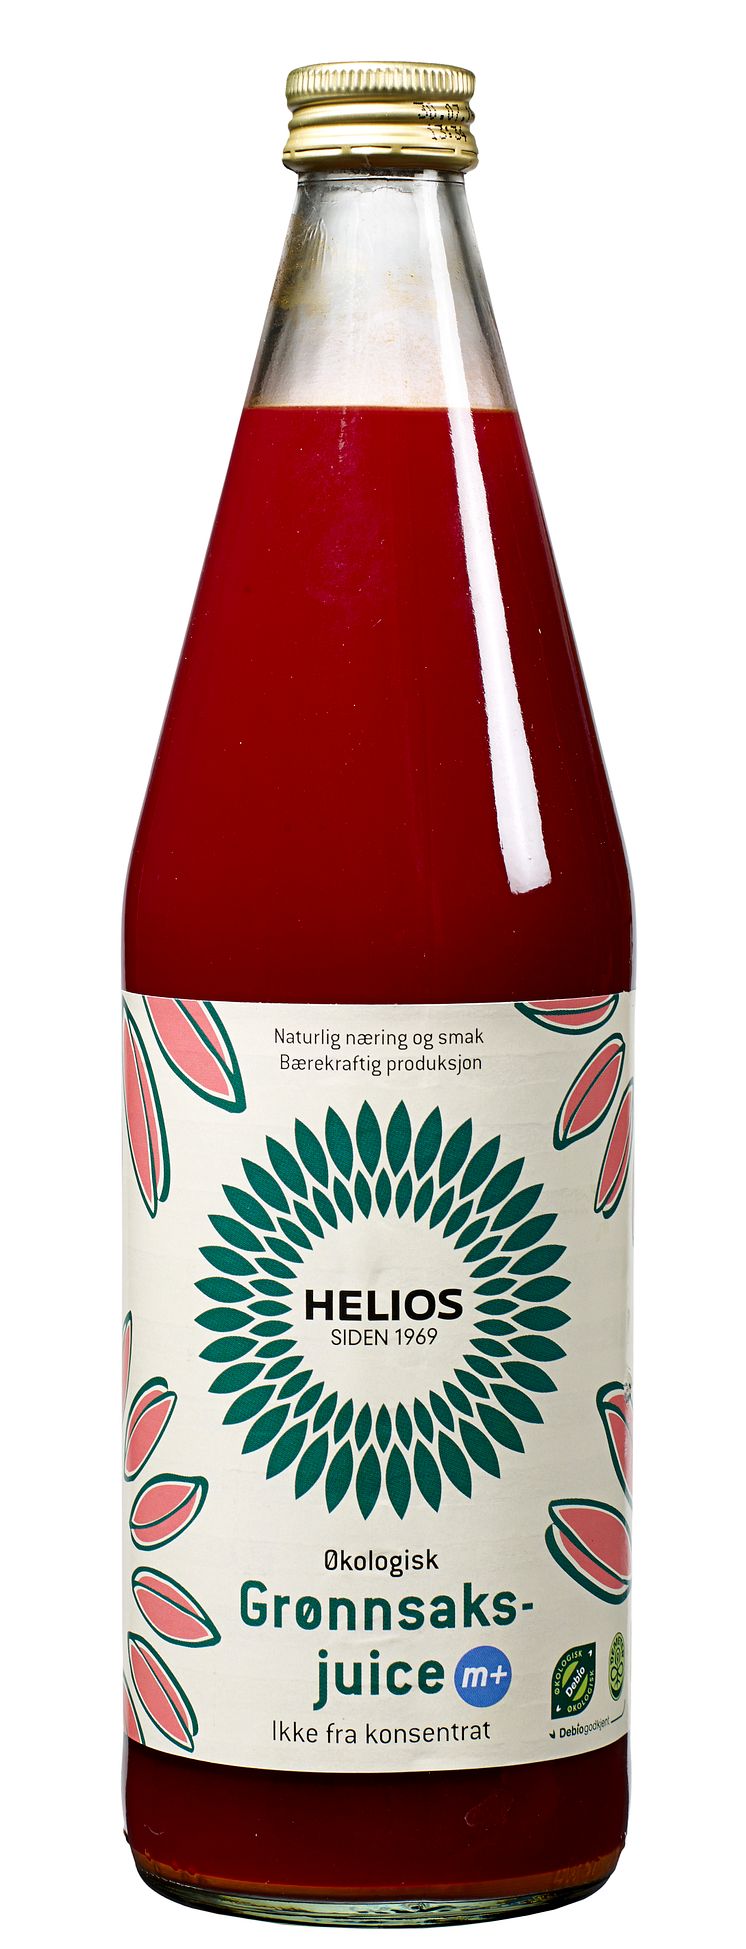 Helios grønnsaksjuice m+ økologisk demeter 0,75 l